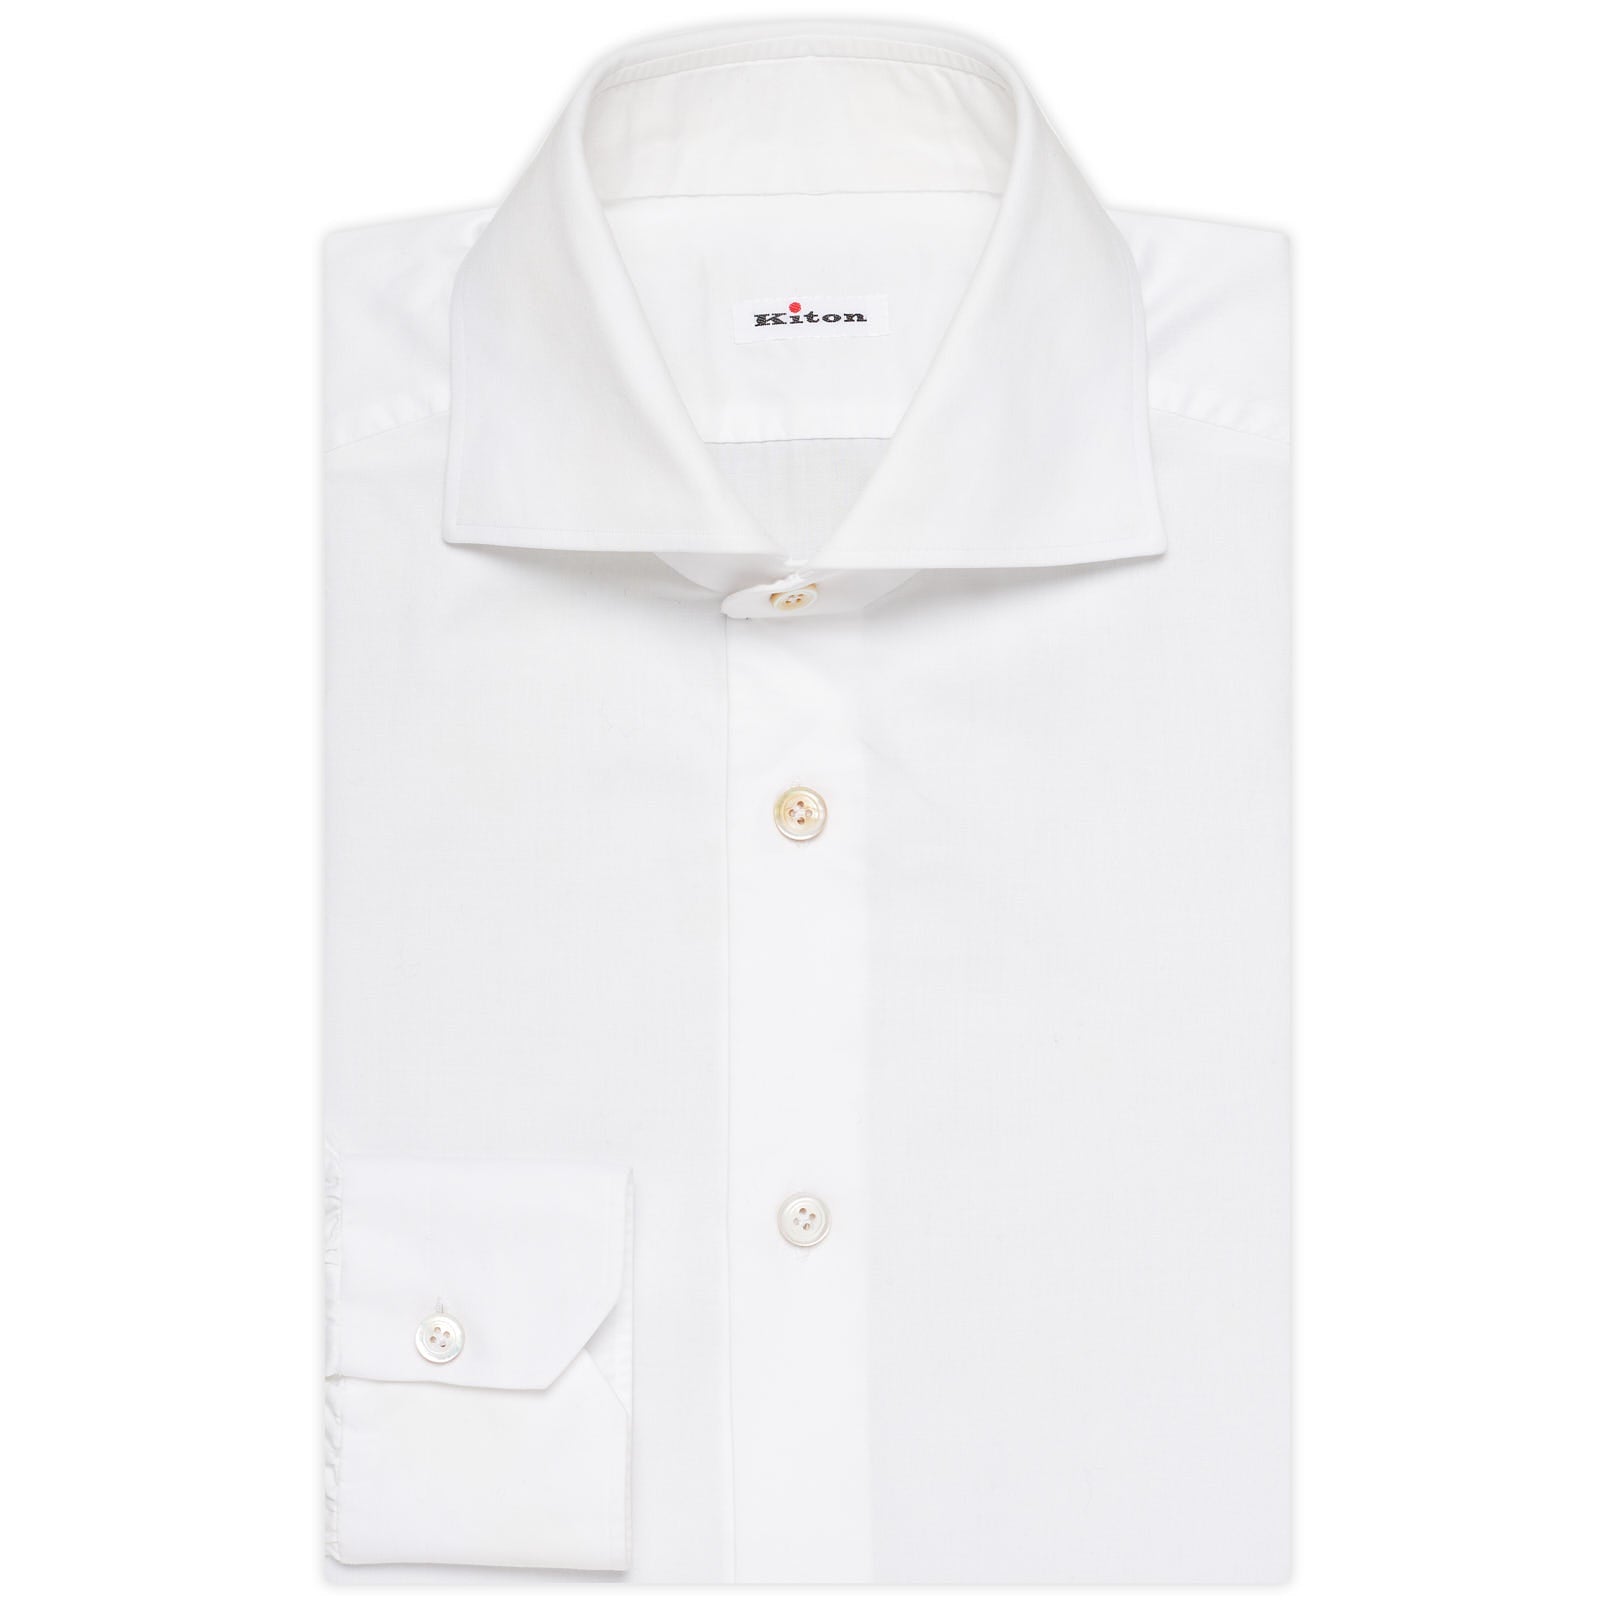 KITON Handmade Bespoke White Twill Cotton Dress Shirt EU 40 NEW US 15.75